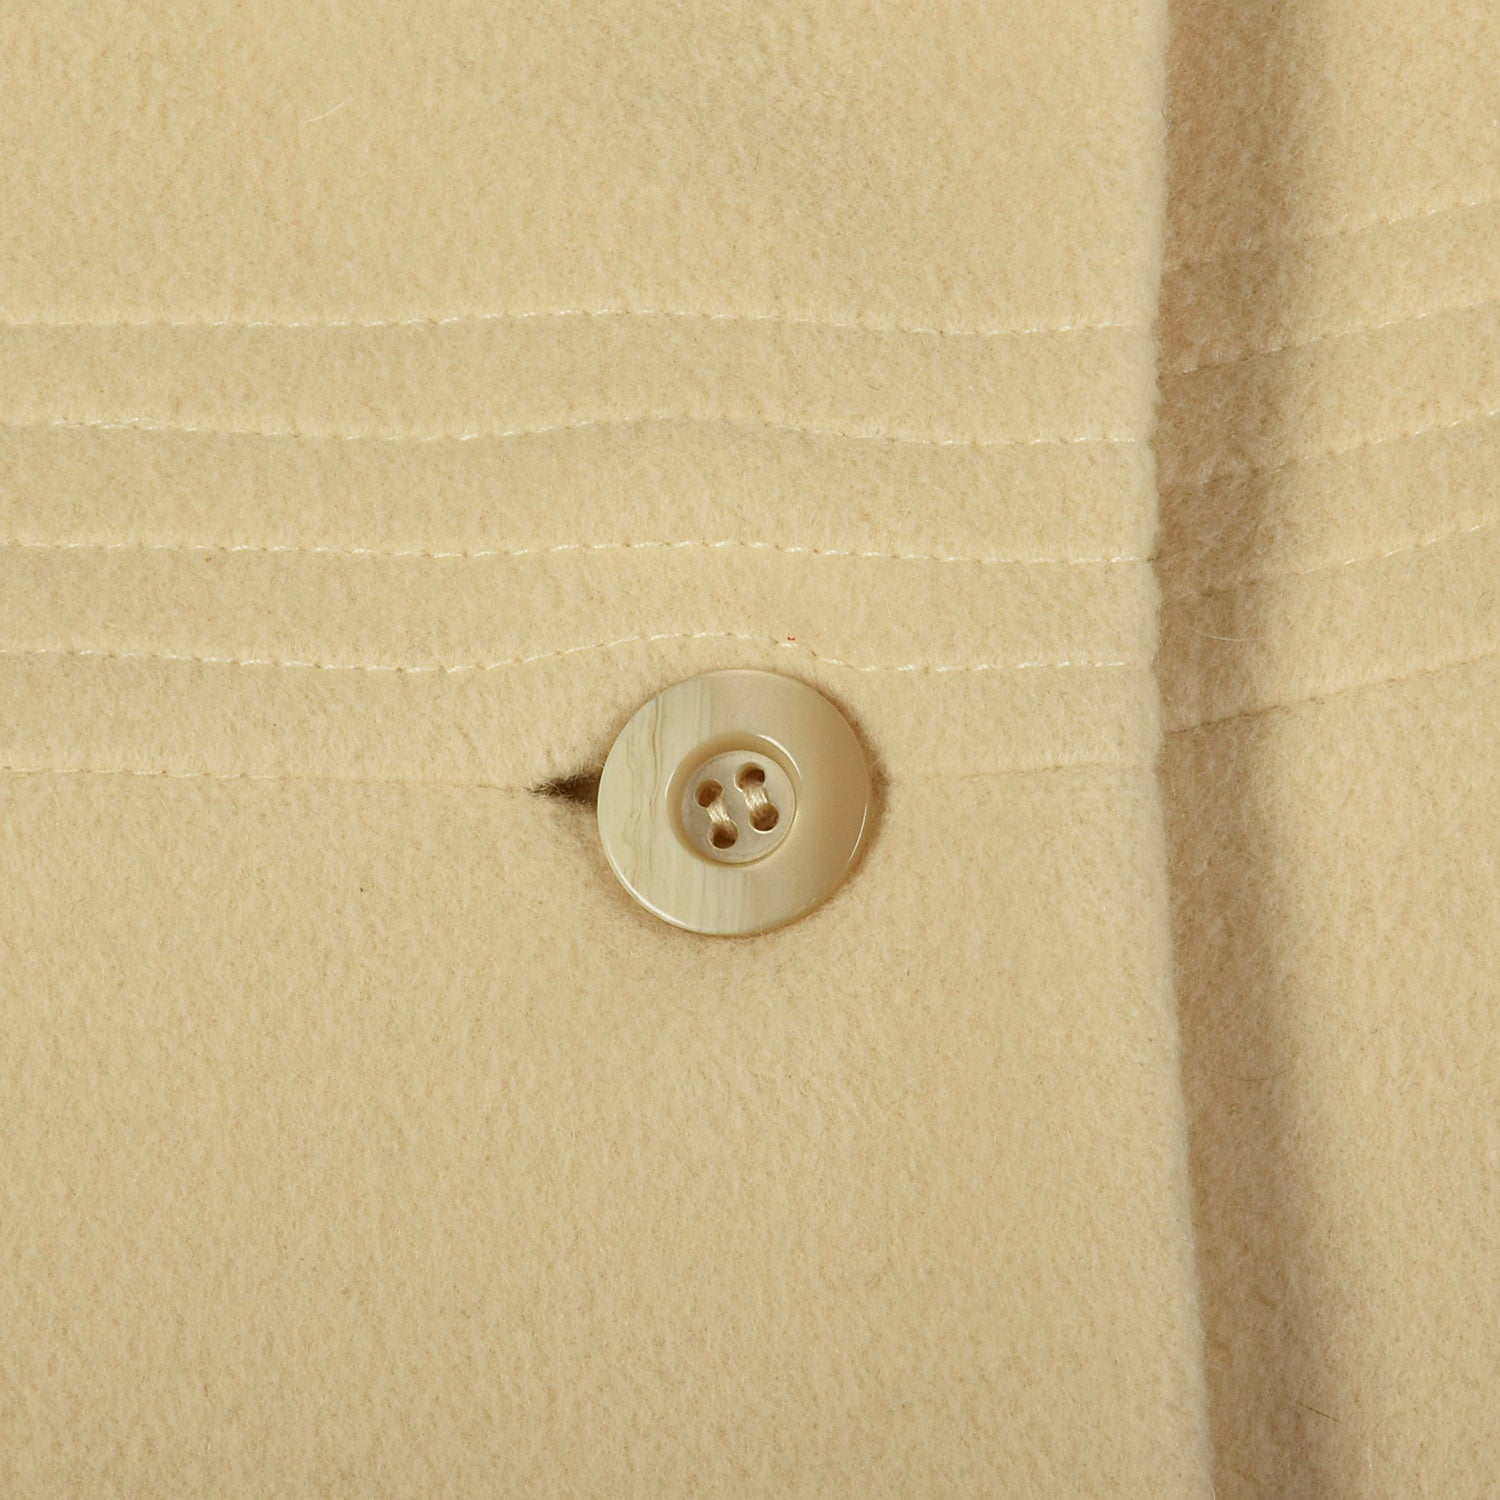 Medium 1970s Minimalist Cashmere Coat Cream Autumn Outerwear with Mandarin Collar